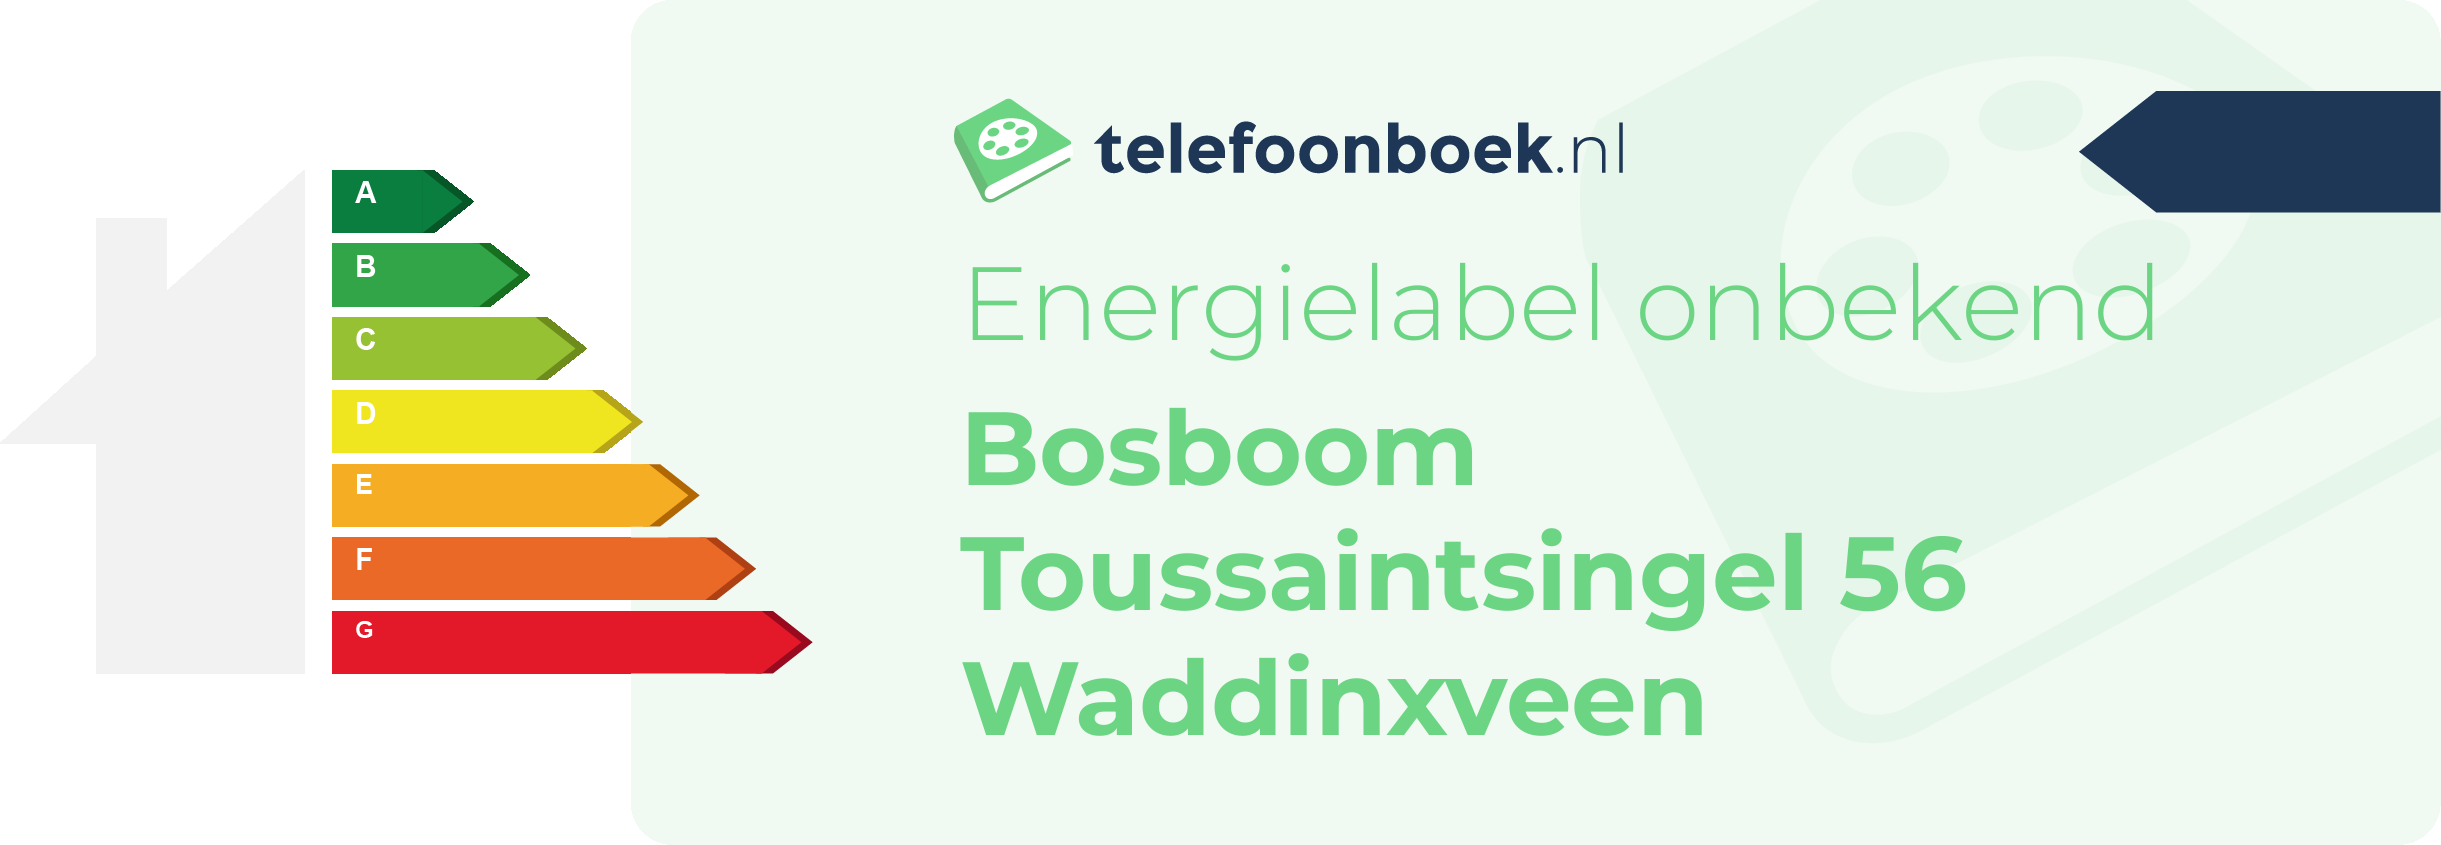 Energielabel Bosboom Toussaintsingel 56 Waddinxveen